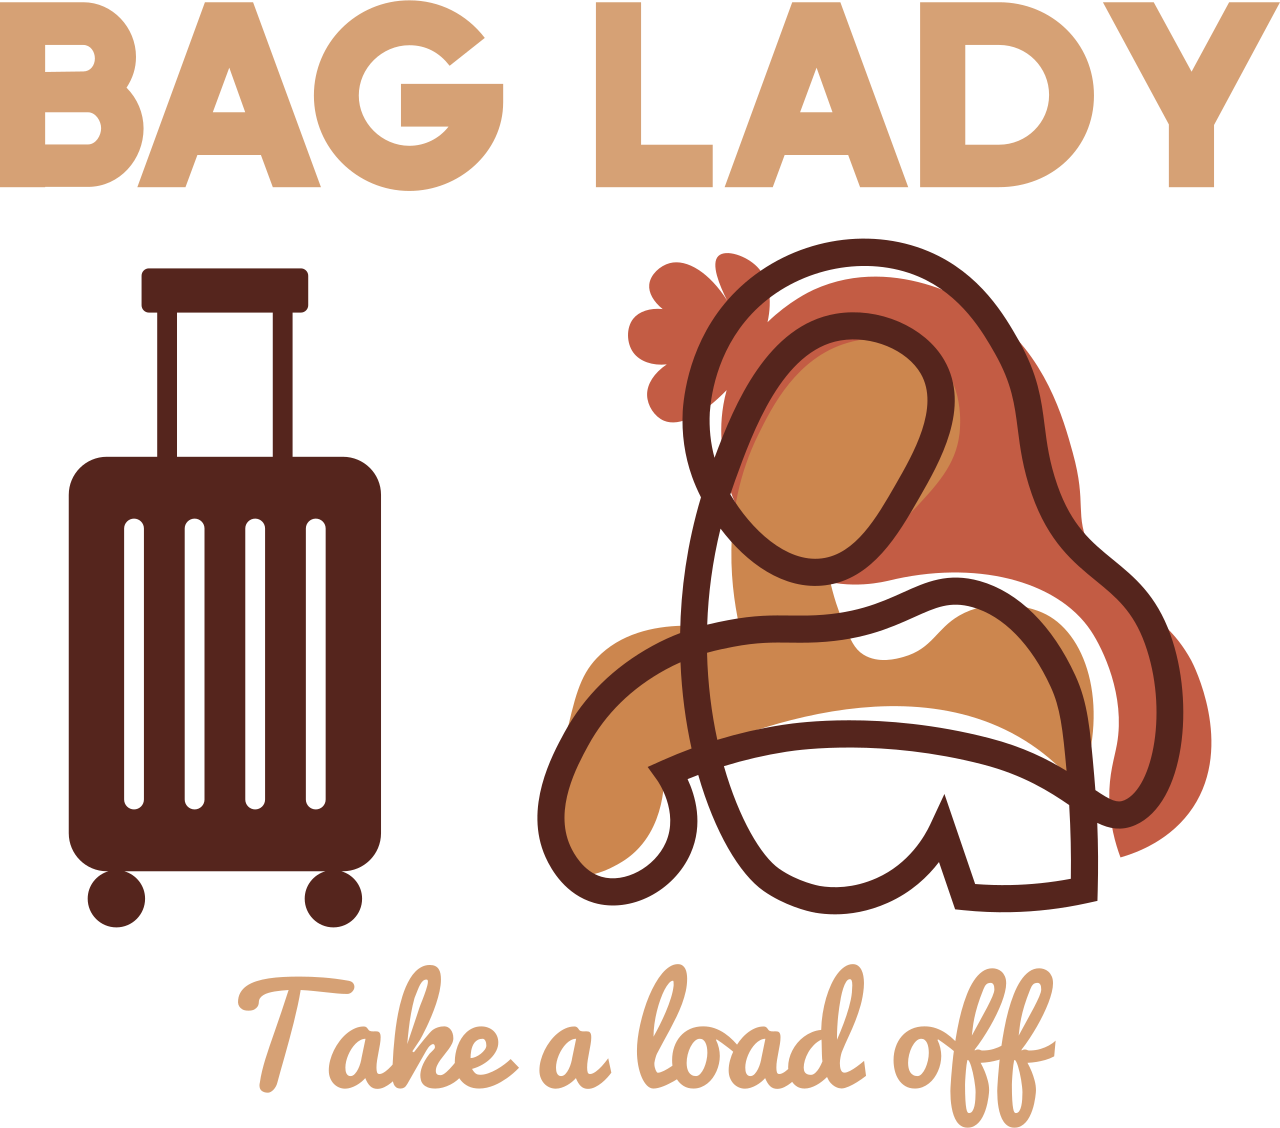 Bag Lady's logo